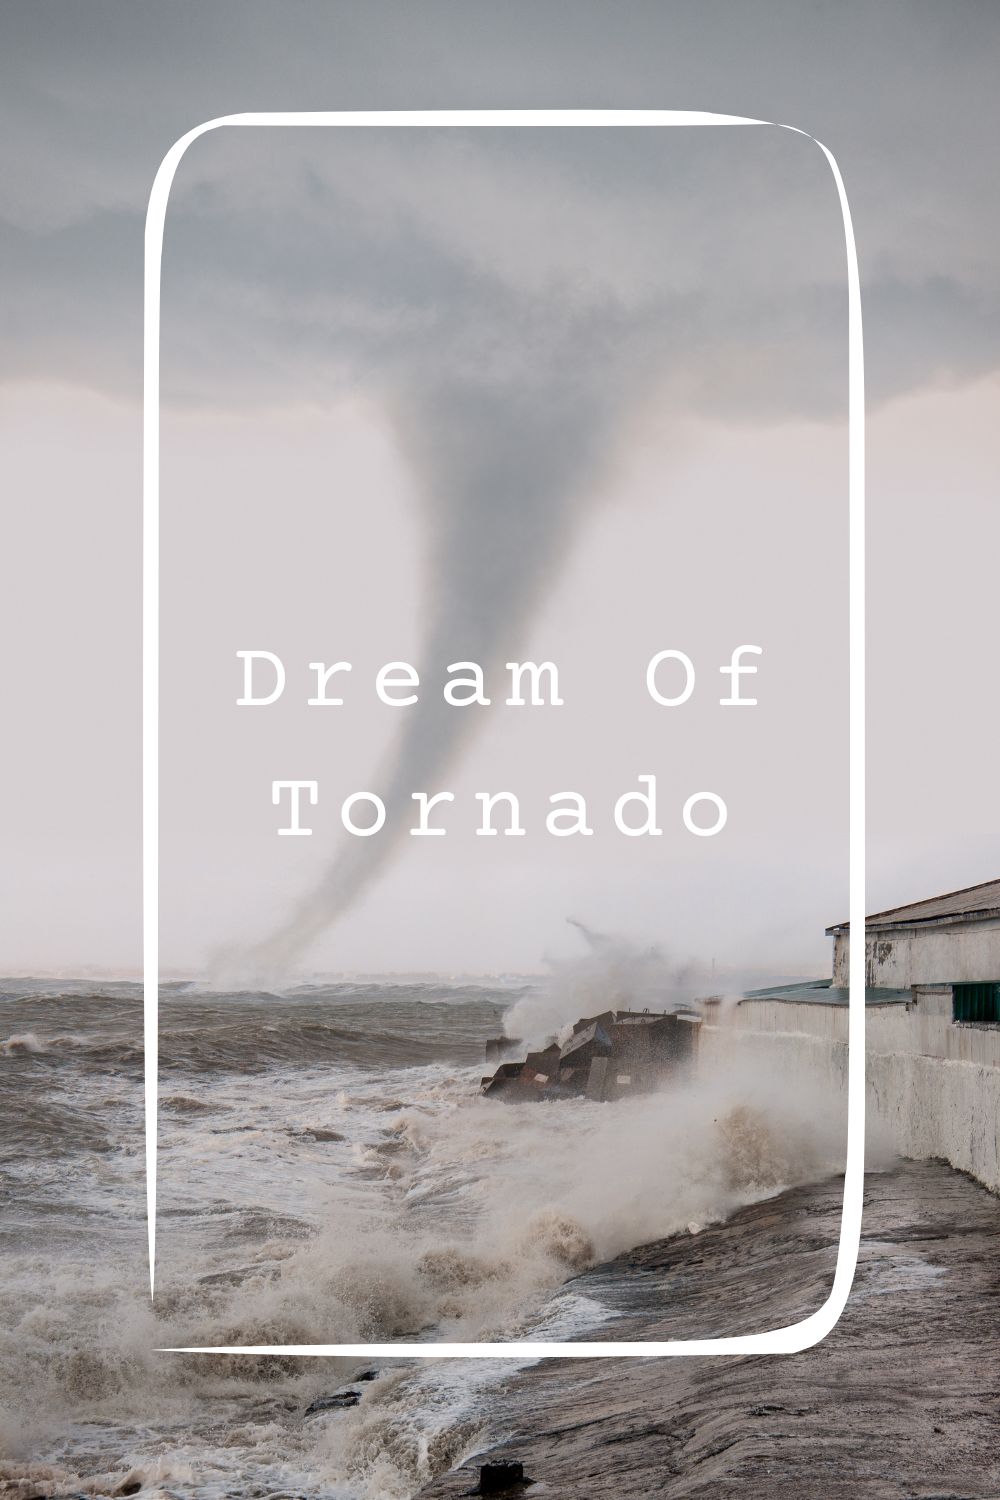 Dream Of Tornado Meanings 2